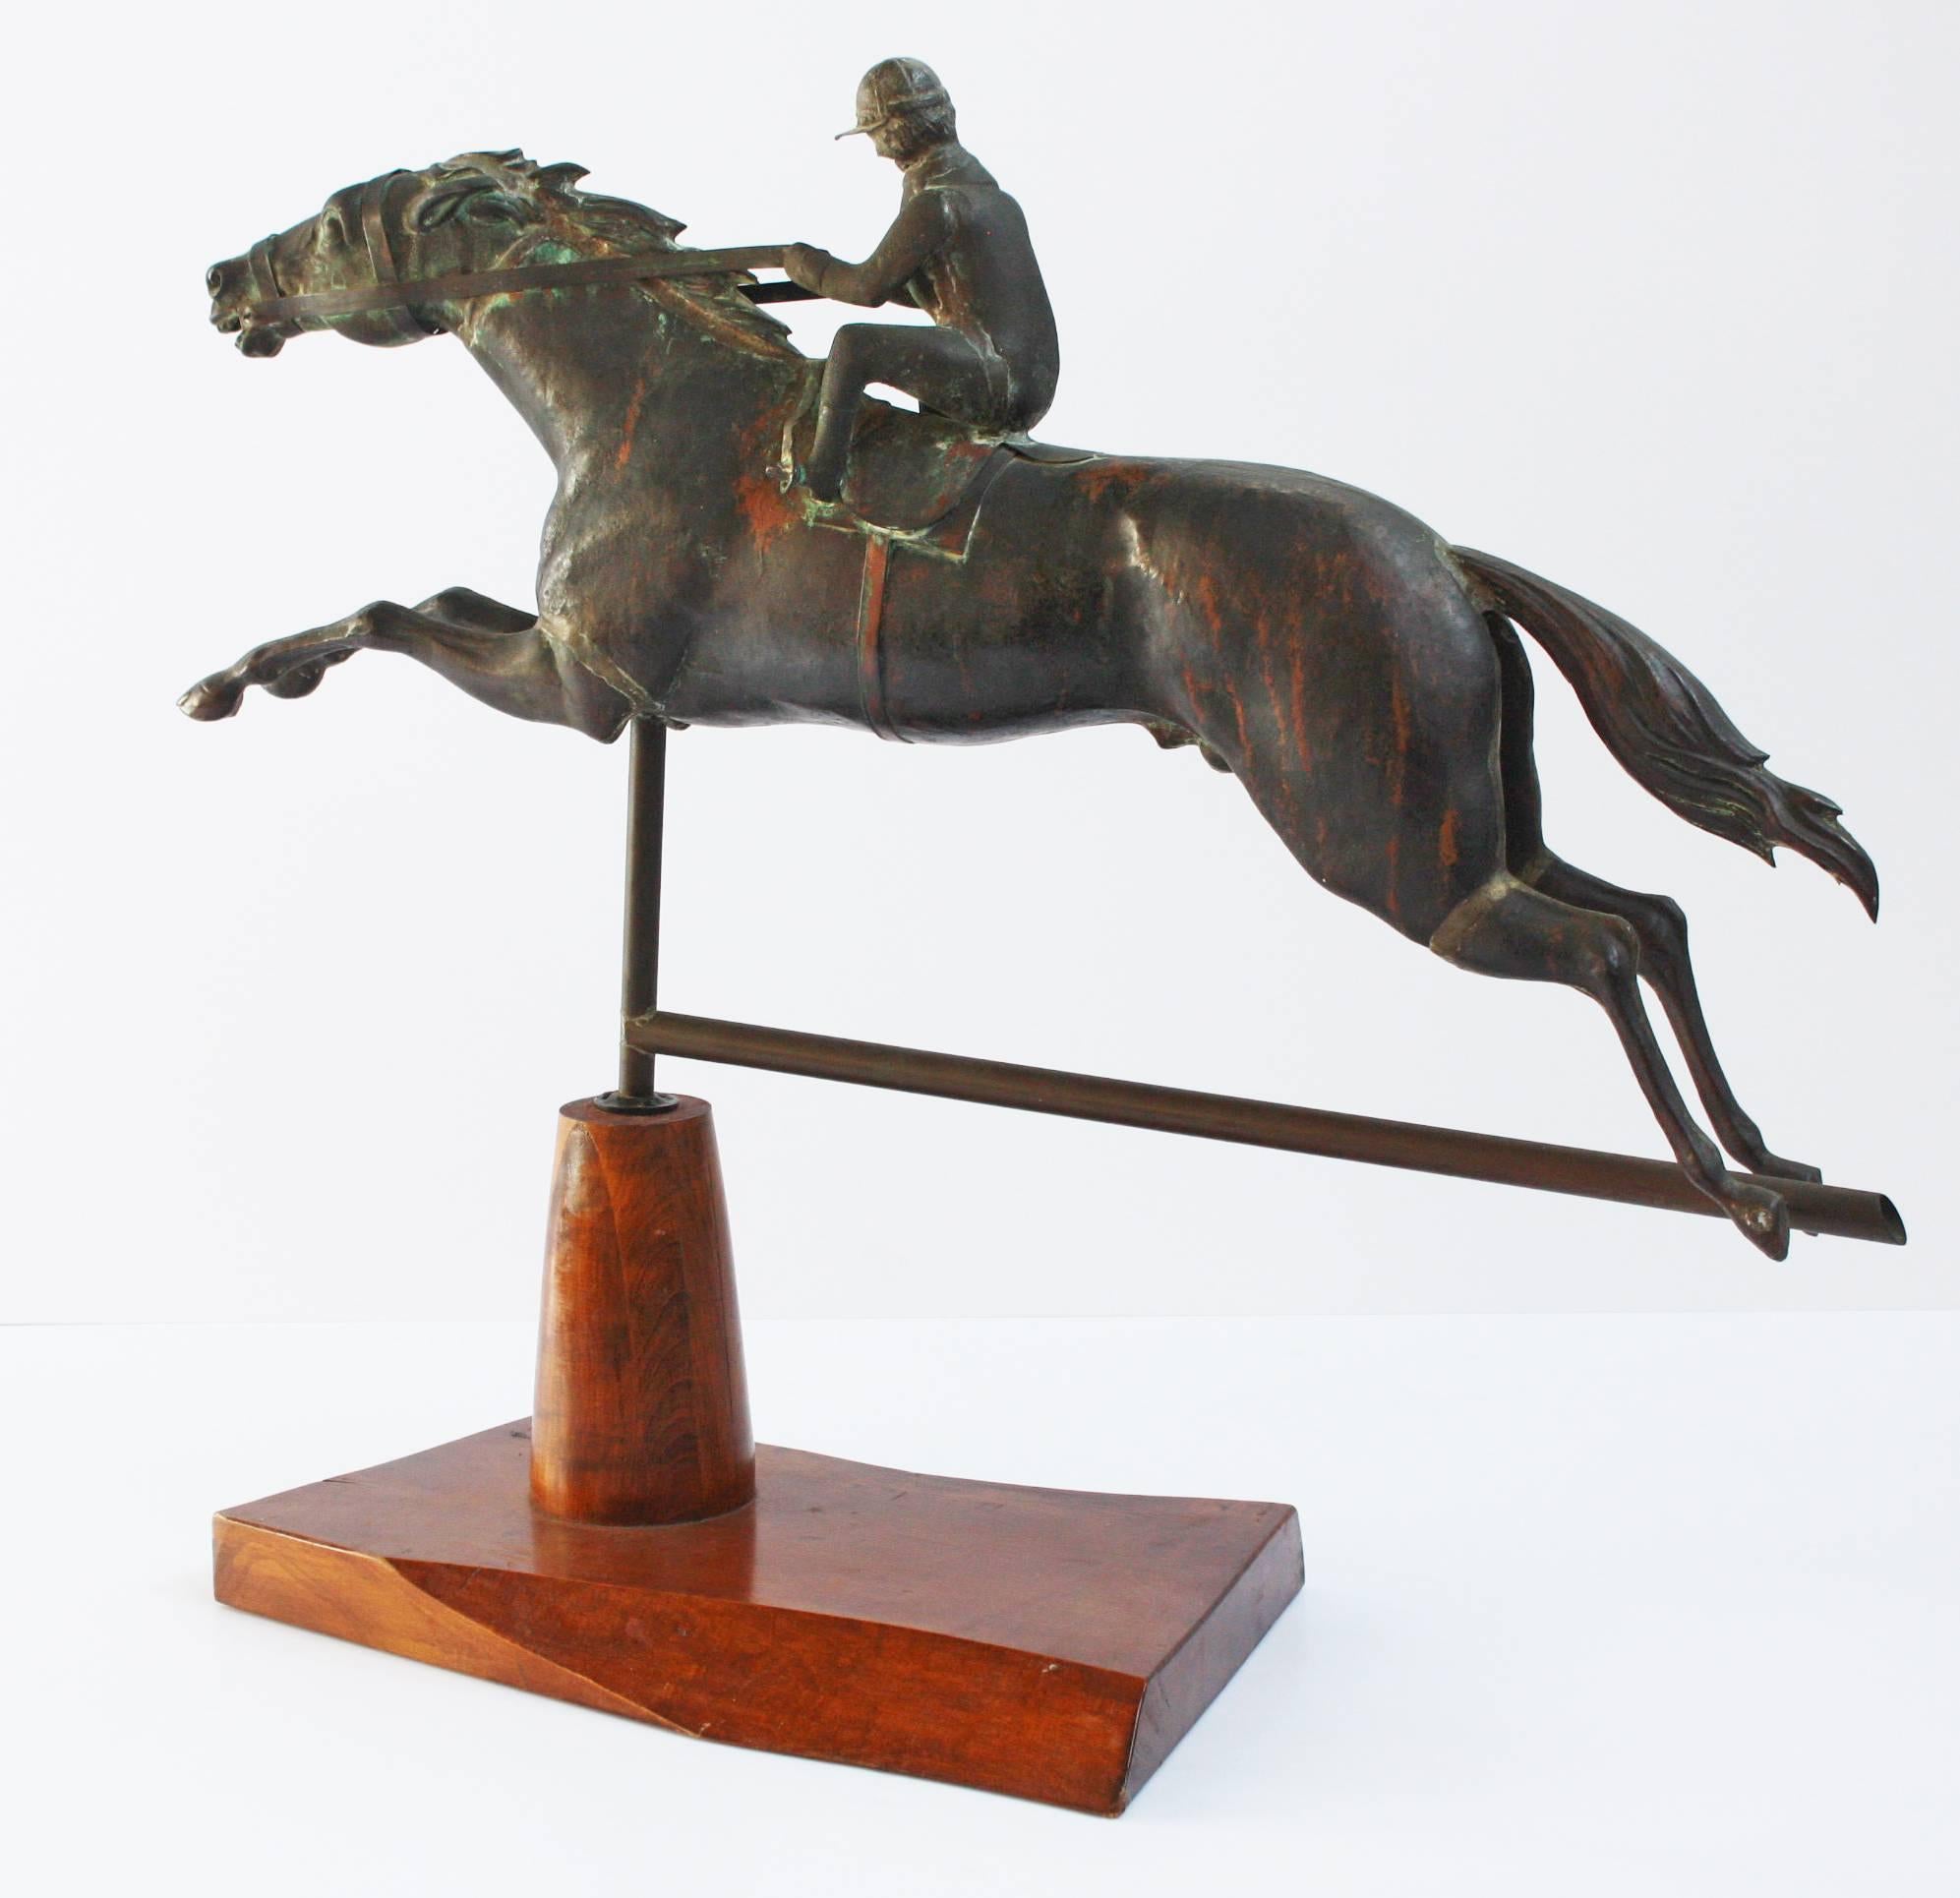 Folk Art Horse and Jockey Weathervane, circa 1890, by J. W. Fiske, New York City